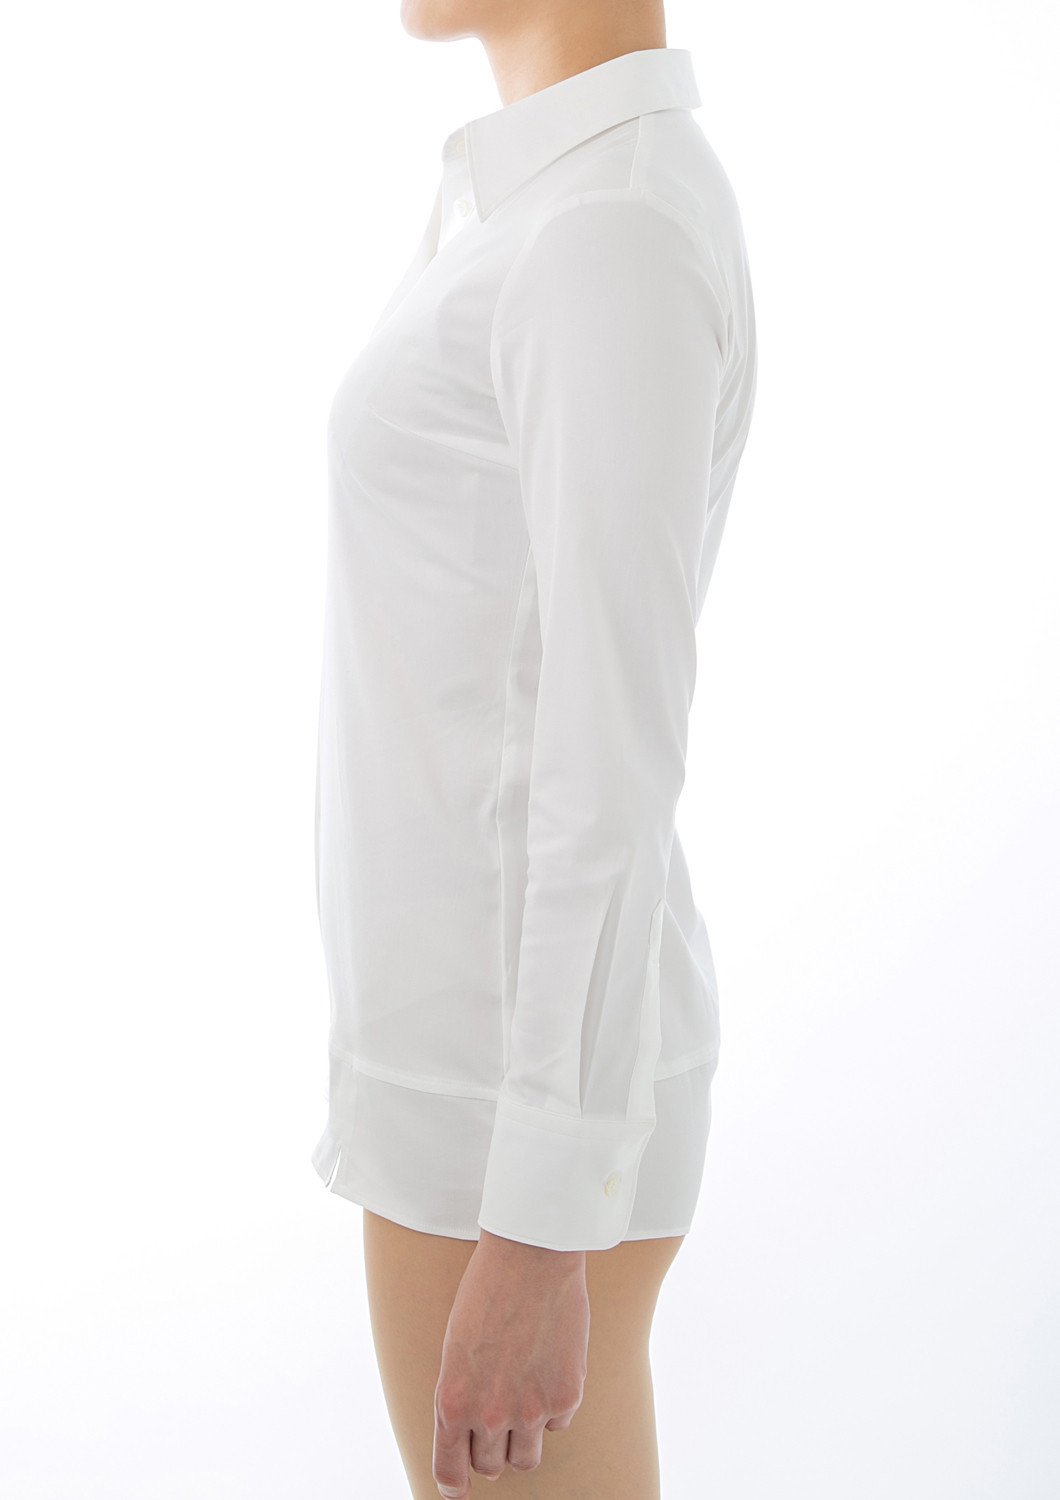 Premium Stretch Easy Care Long Sleeve Bodysuit Shirt White - LEONIS SHIRTS & FAVORITES